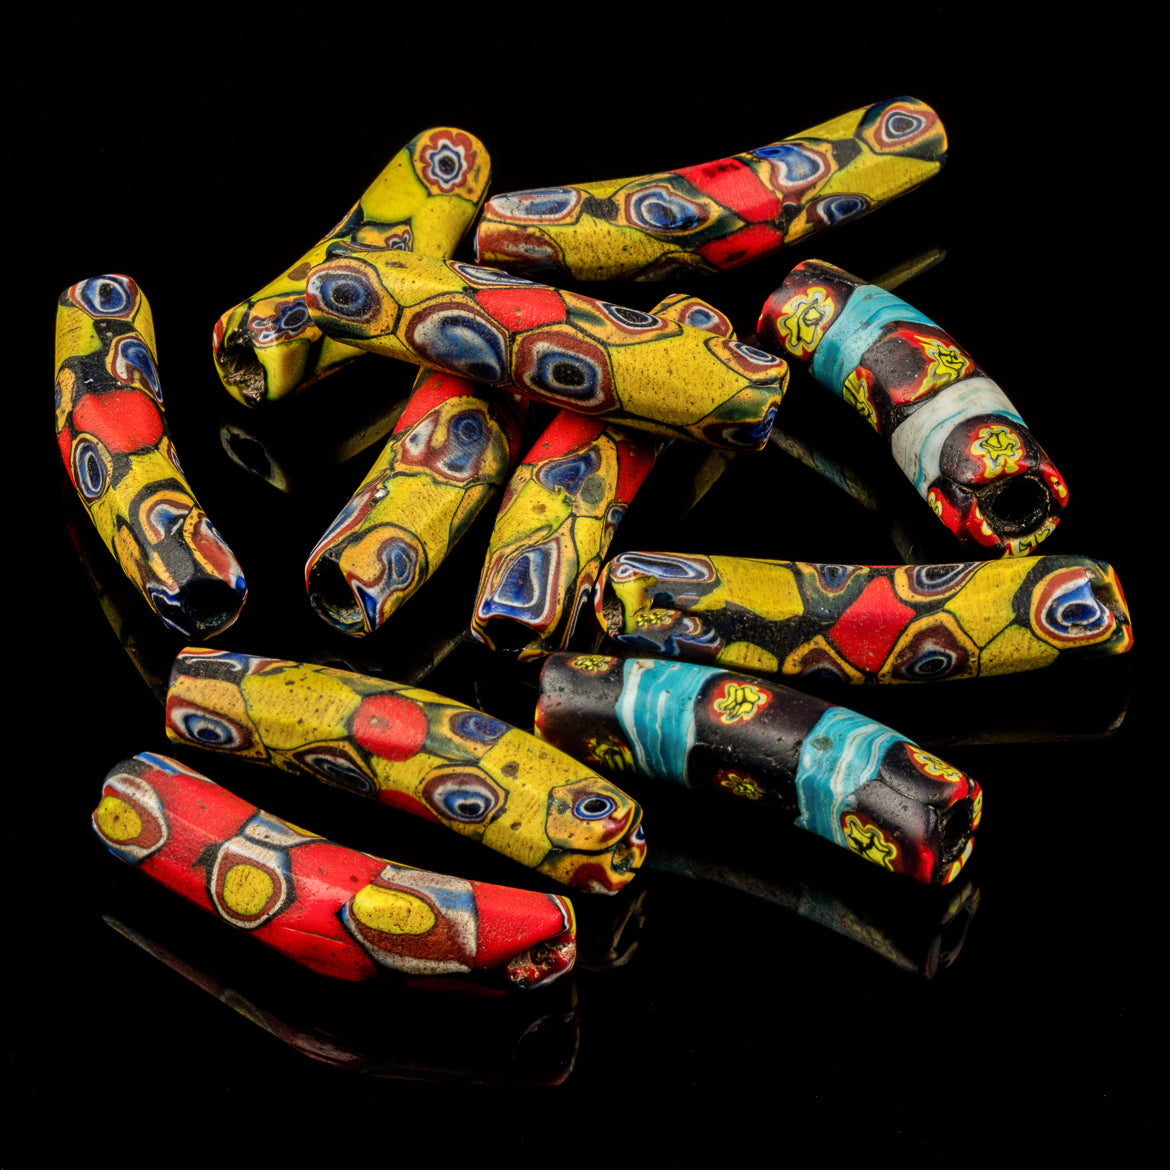 Tribal Trade Beads - African Plural Art - African Art - Beads - Embellishments - Trims - Antique African, Venetian Millefiori Glass Trade Beads